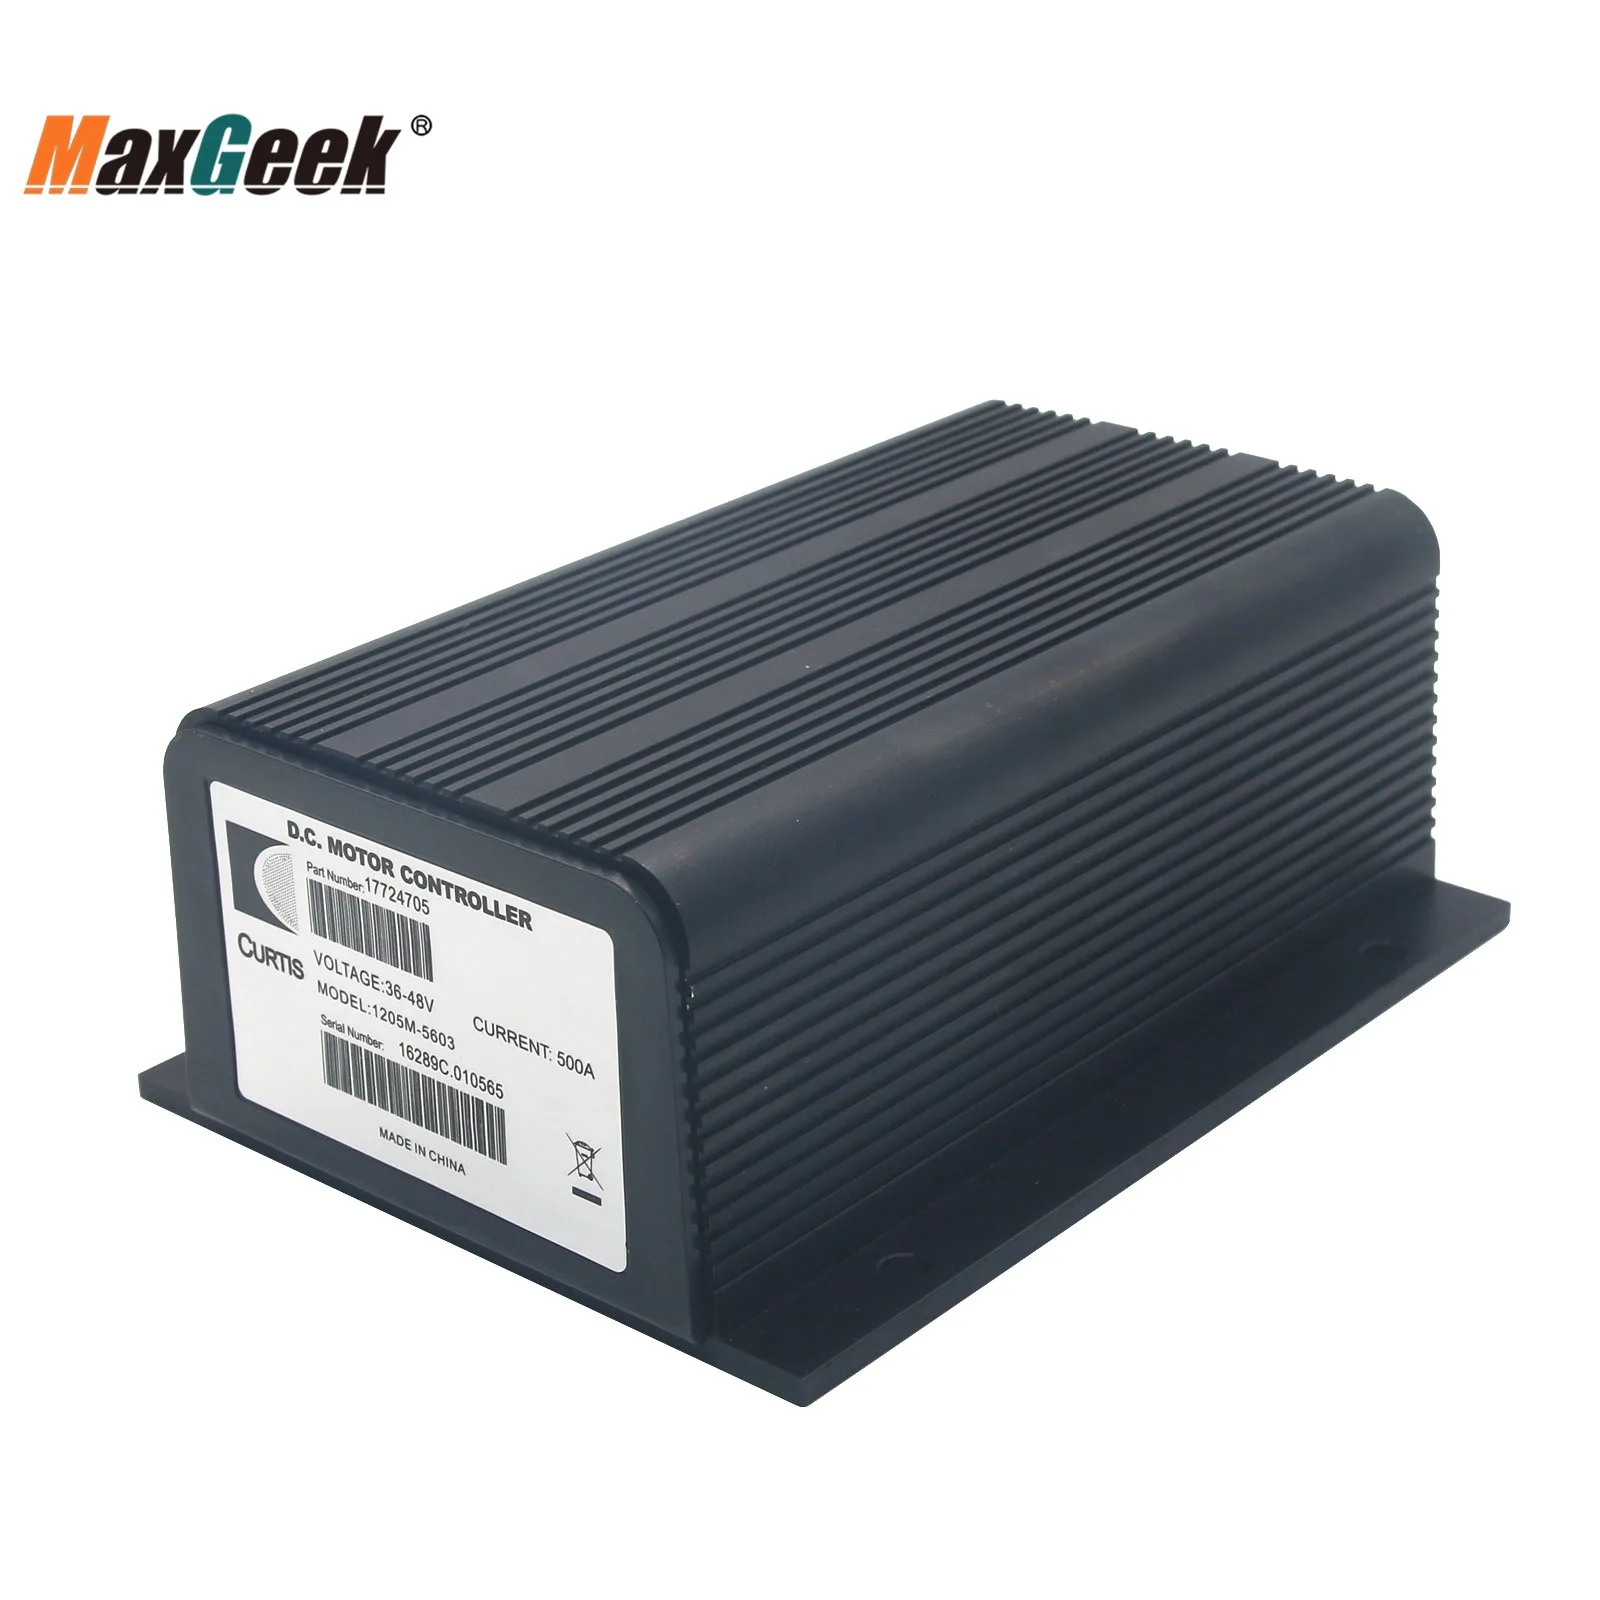 

Maxgeek 48V Accelerator 0-5k P125M-5603 500A DC Motor Controller Replacing CURTIS 1205 1205M-5601 1205M-5603